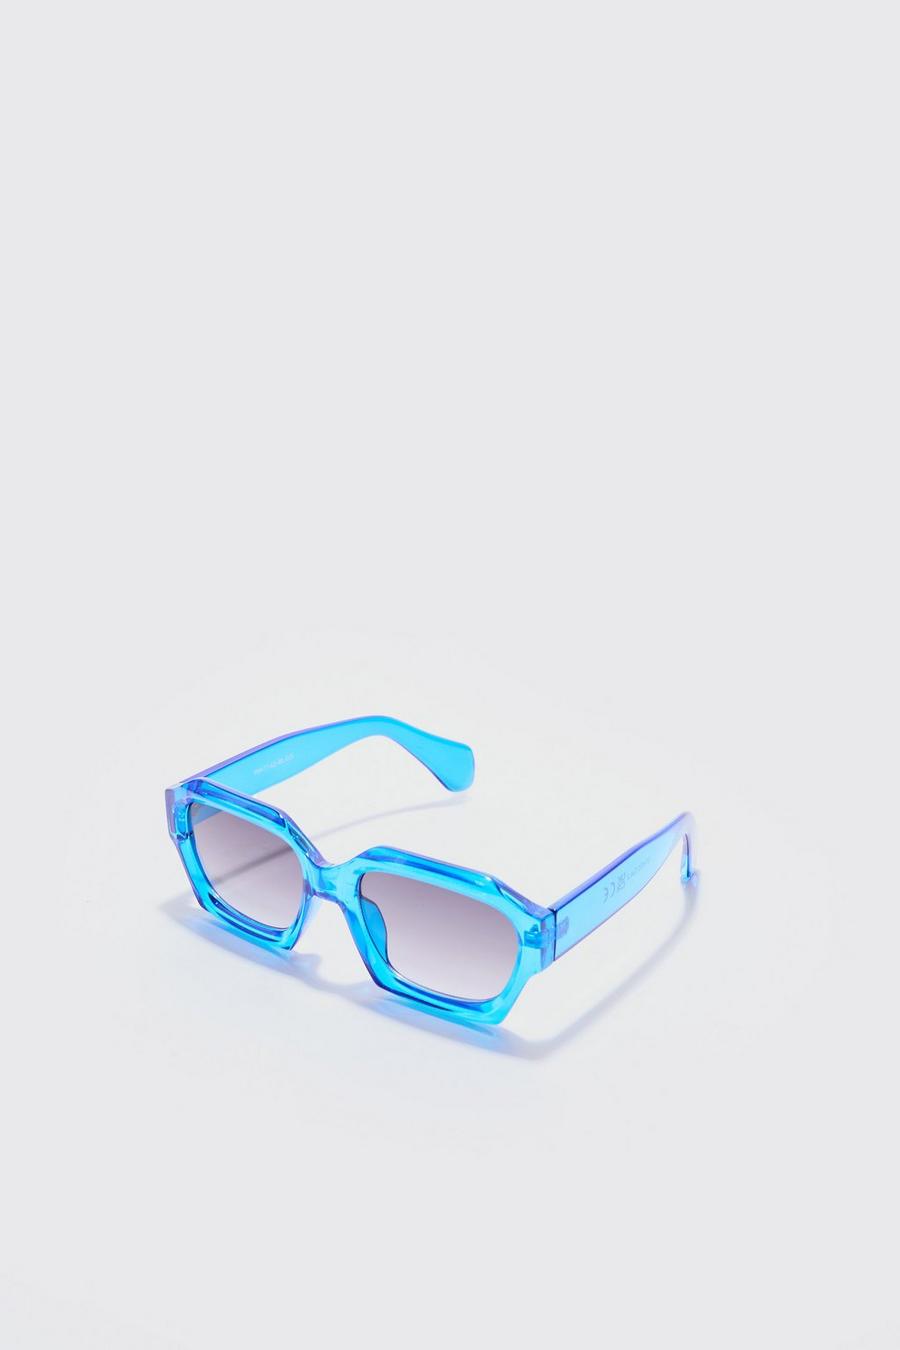 Klobige sechseckige Sonnenbrille in Blau, Blue